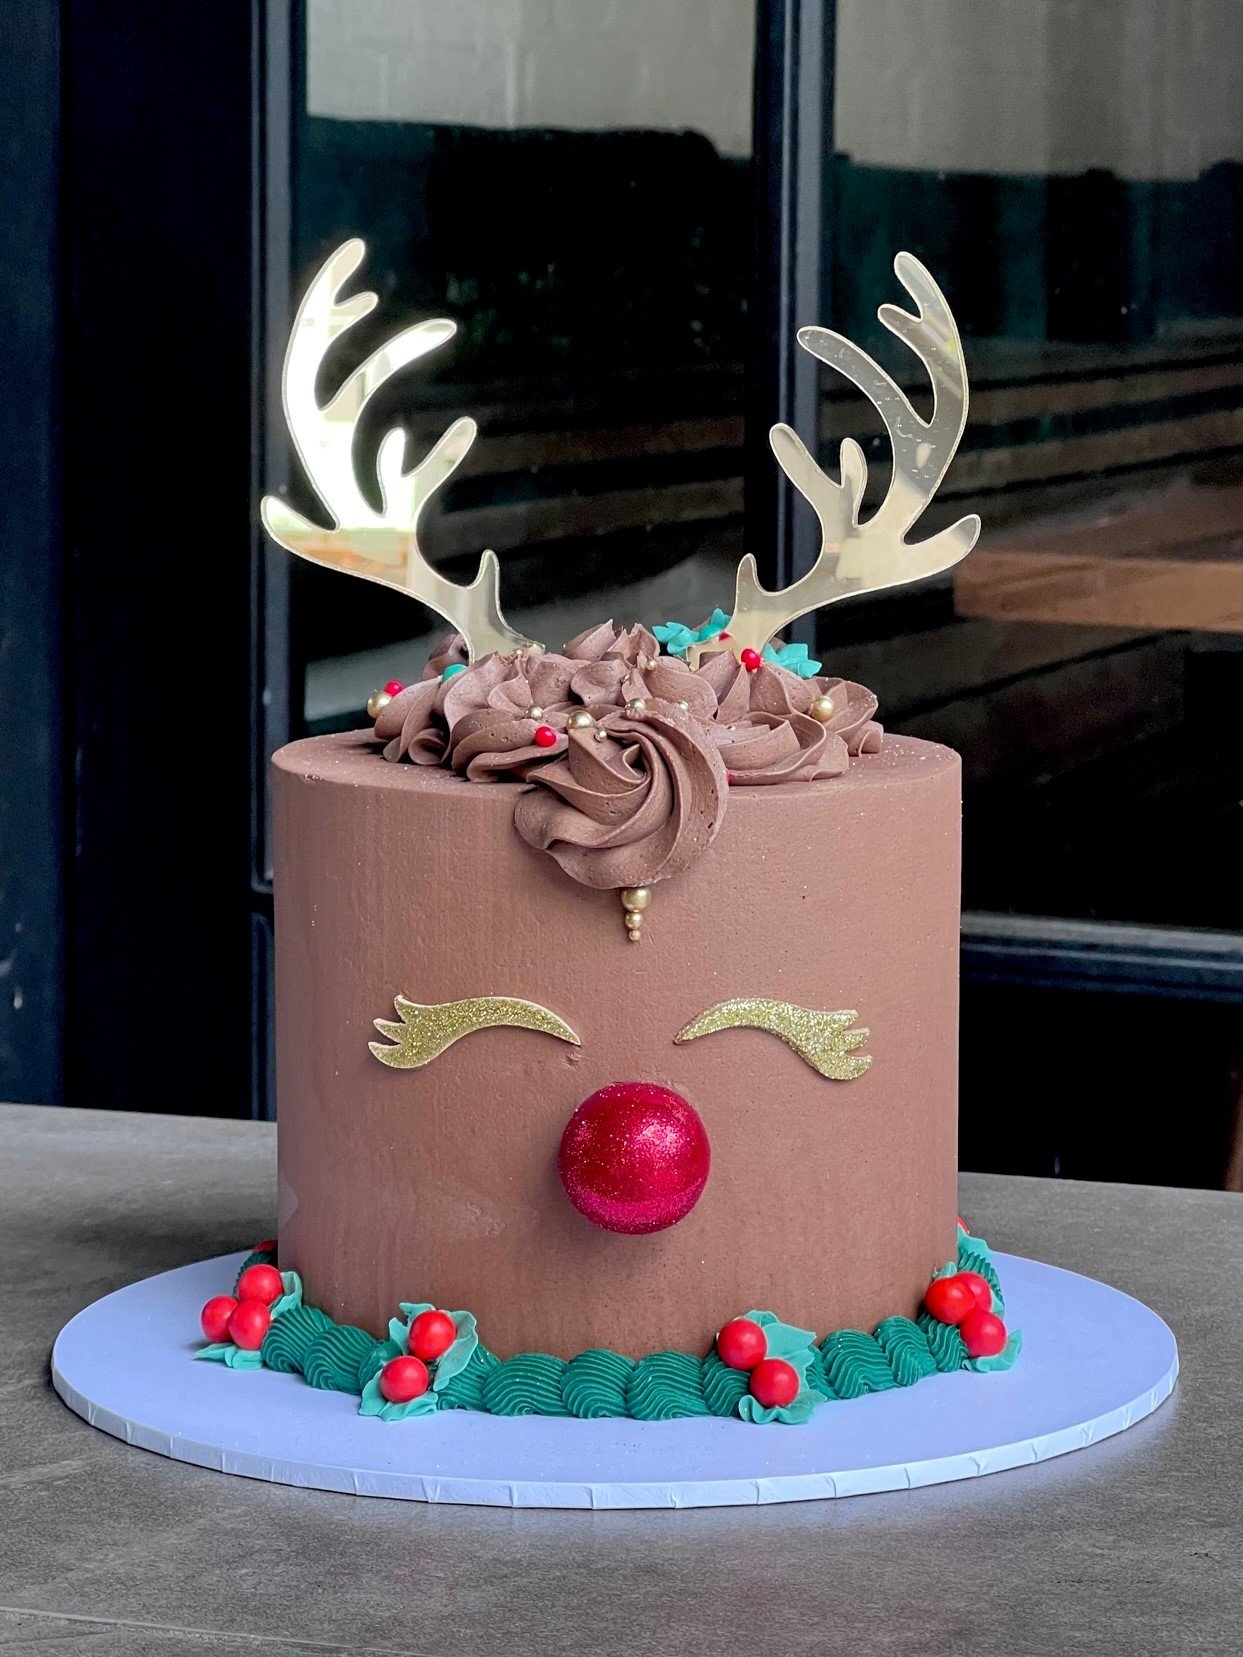 vanillapodspecialtycakes-noveltycakes-brisbanecakes-birthdaycakebrisbane-buttercreamcake (8).jpg